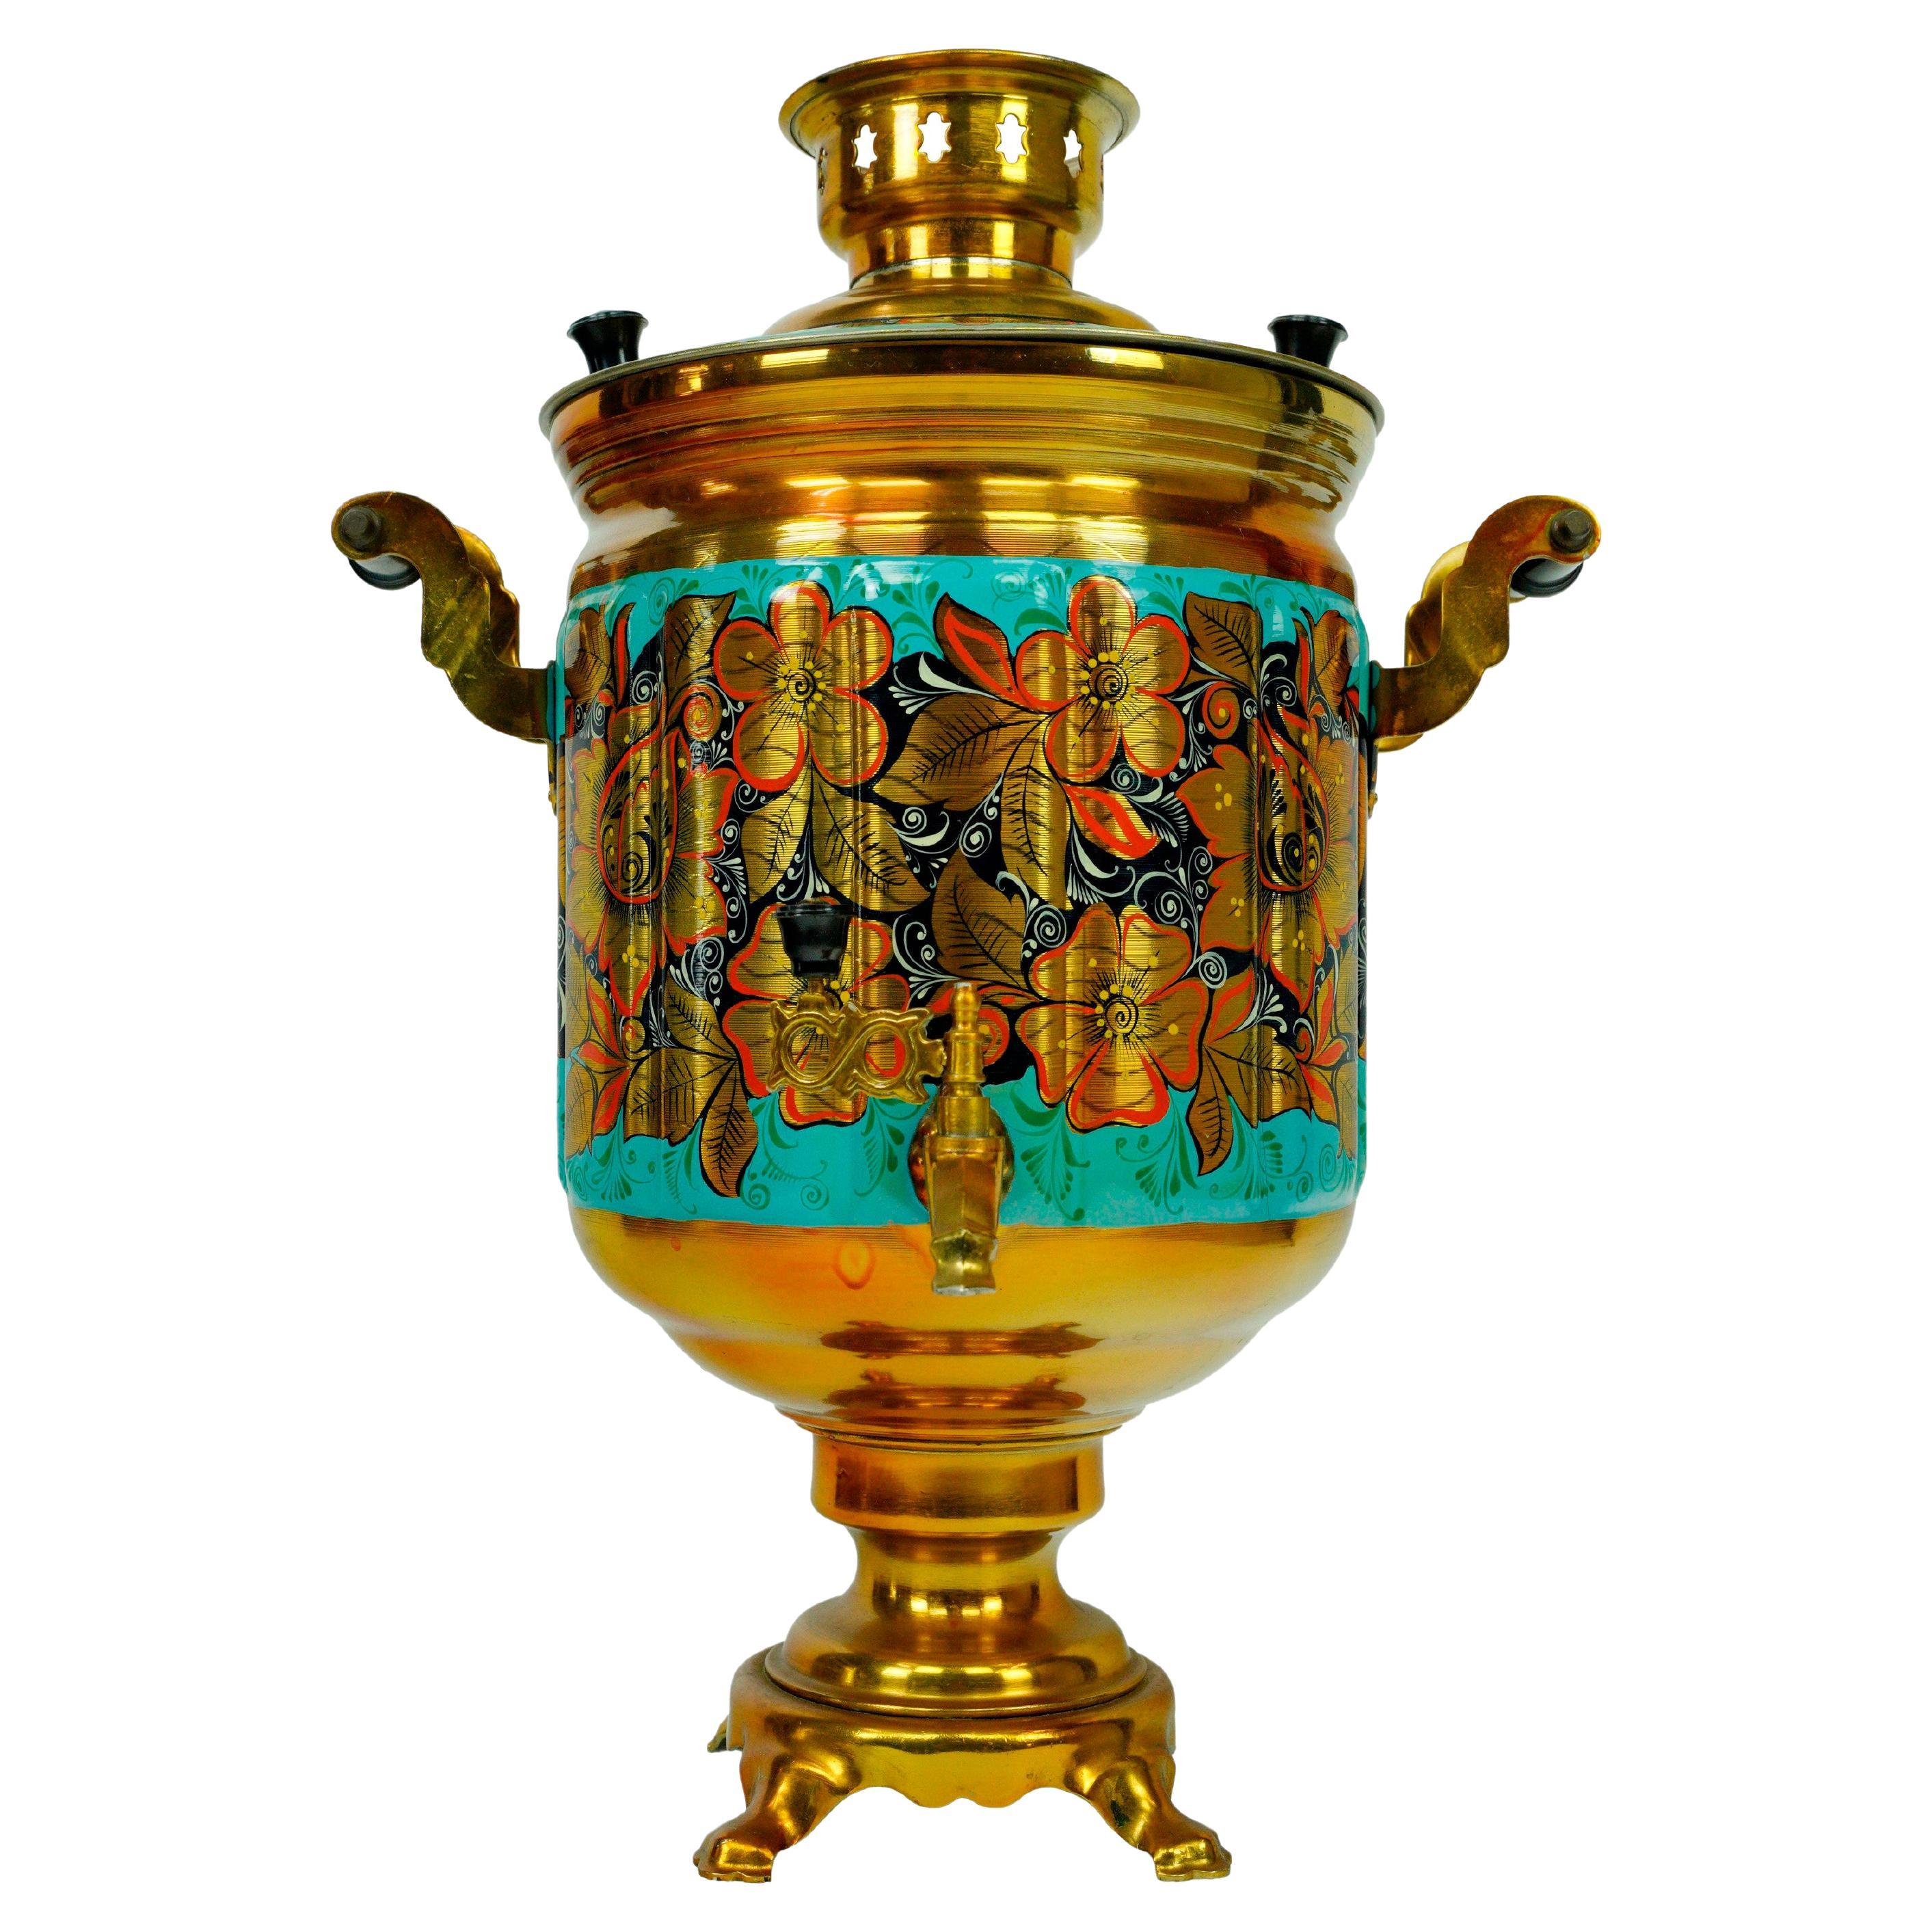 Soviet Russian Floral Brass Electric Samovar Teapot Antique For Sale